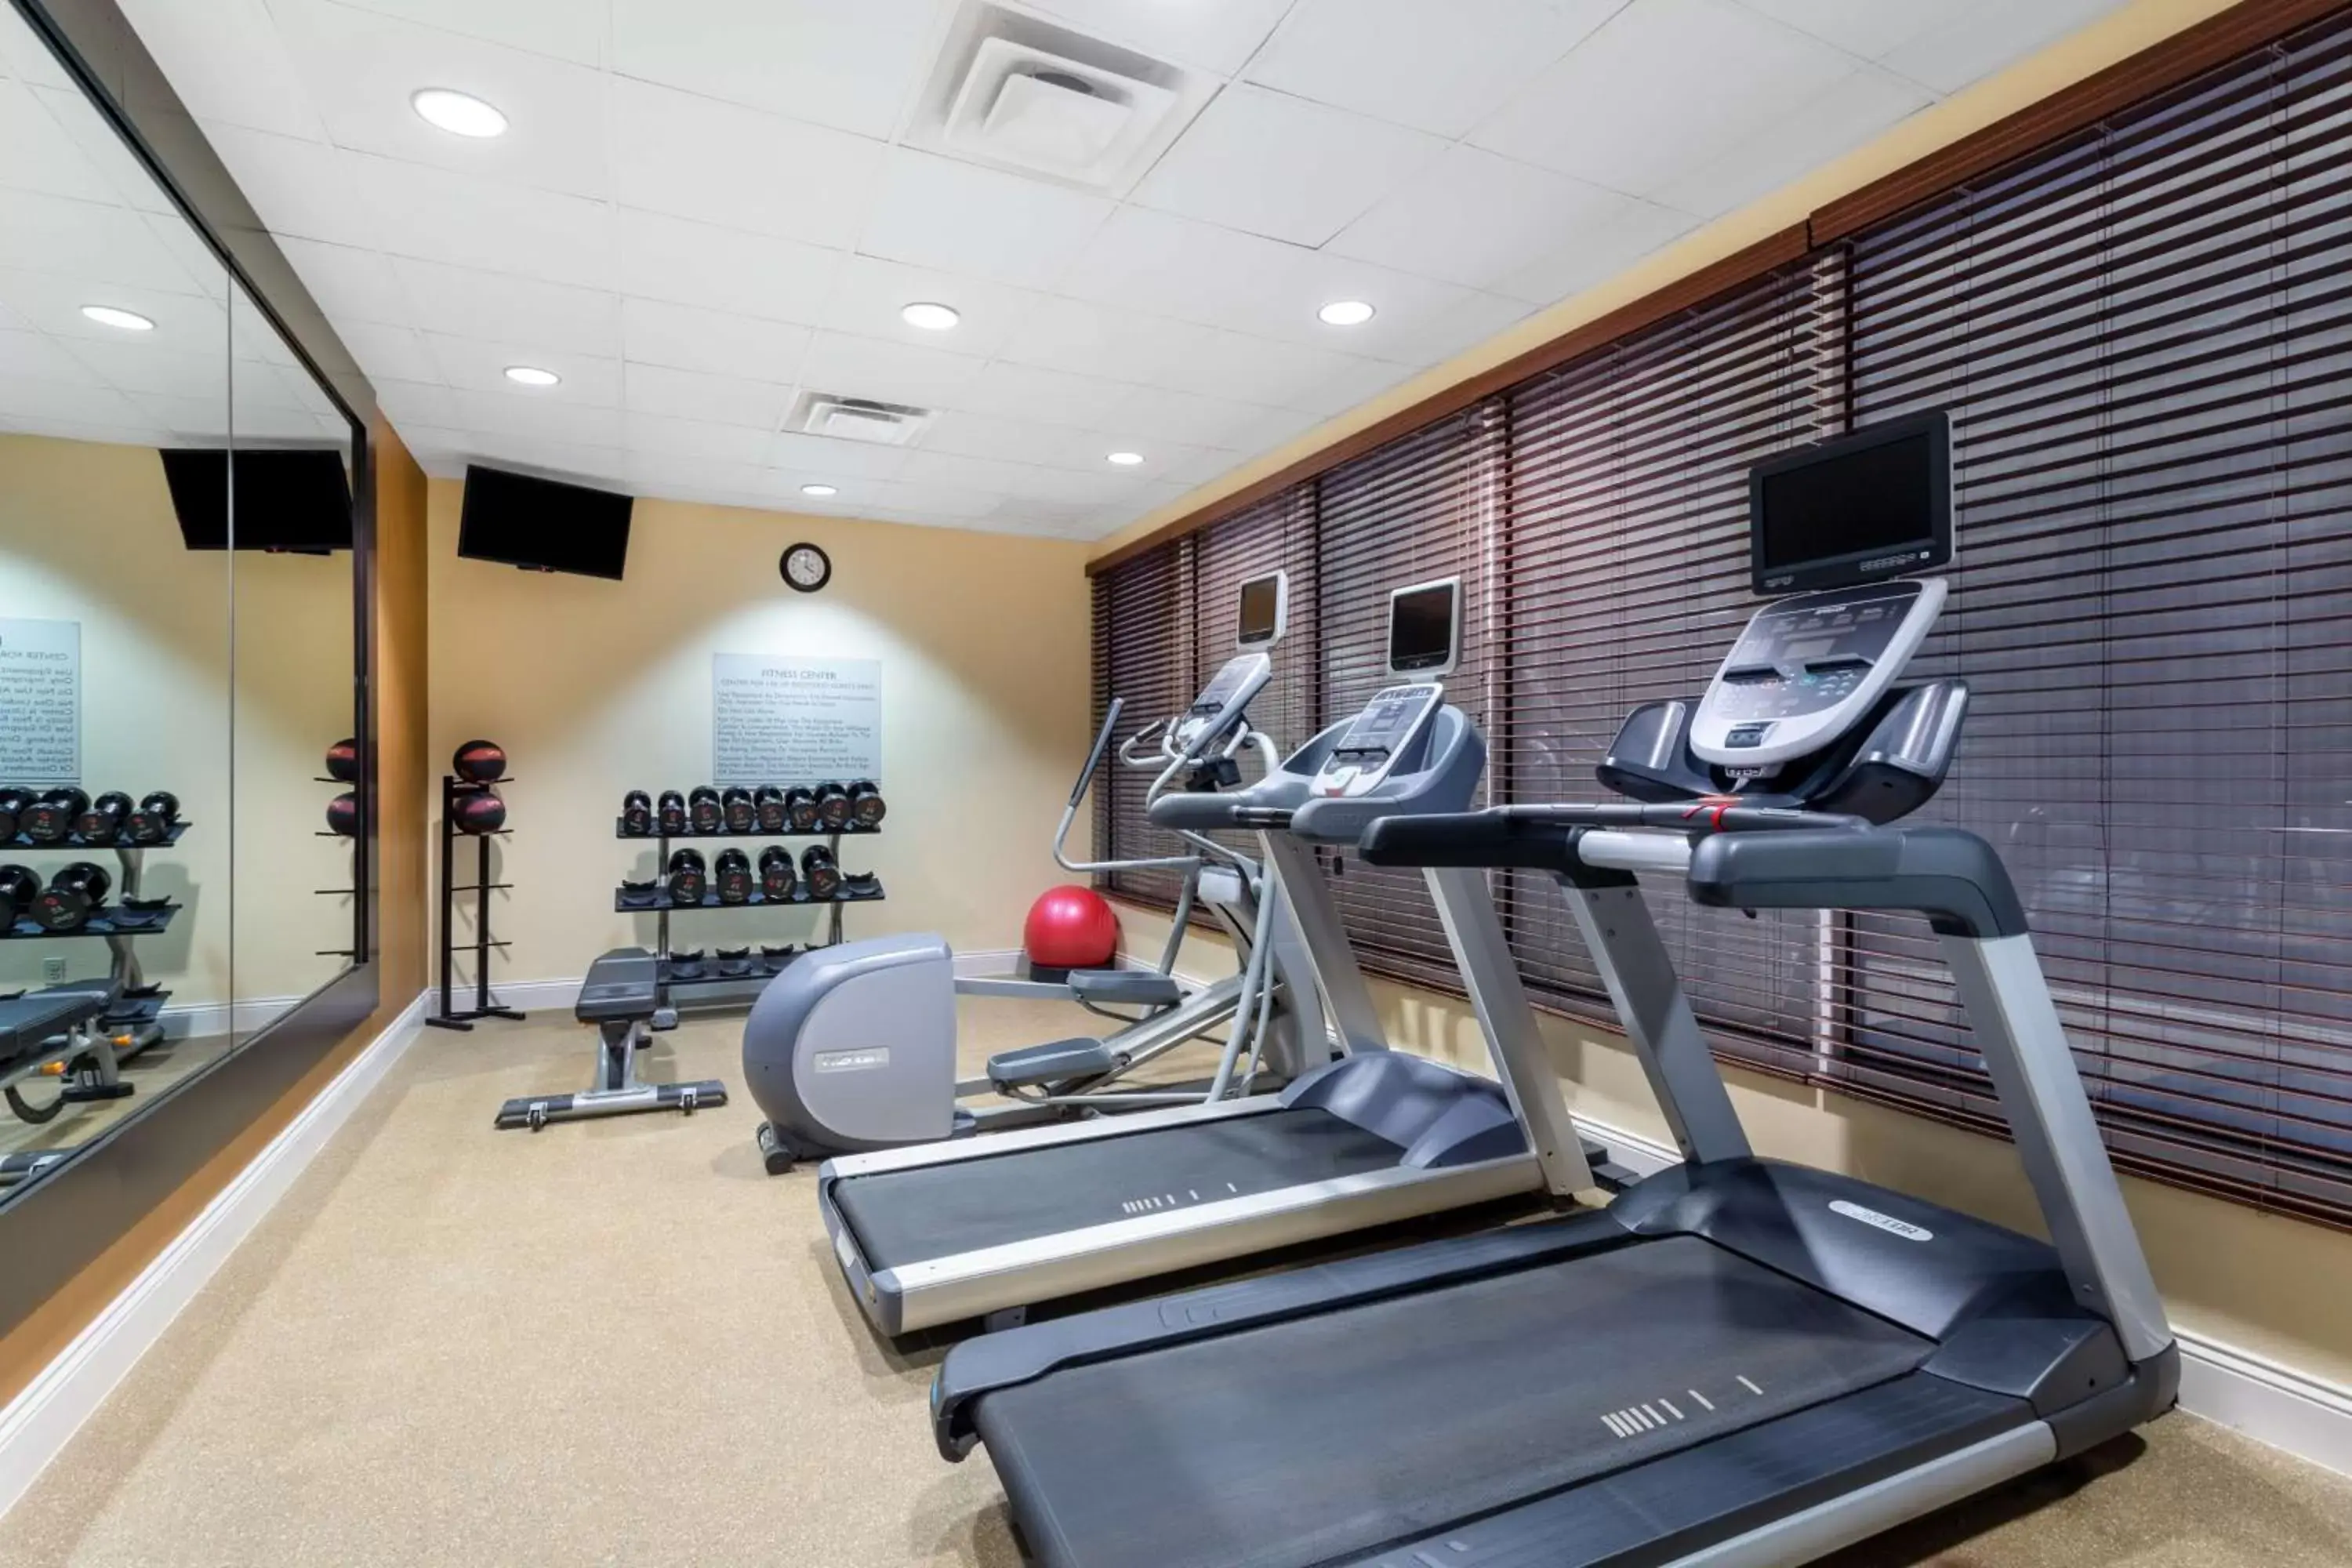 Fitness centre/facilities, Fitness Center/Facilities in Hilton Garden Inn Islip/MacArthur Airport